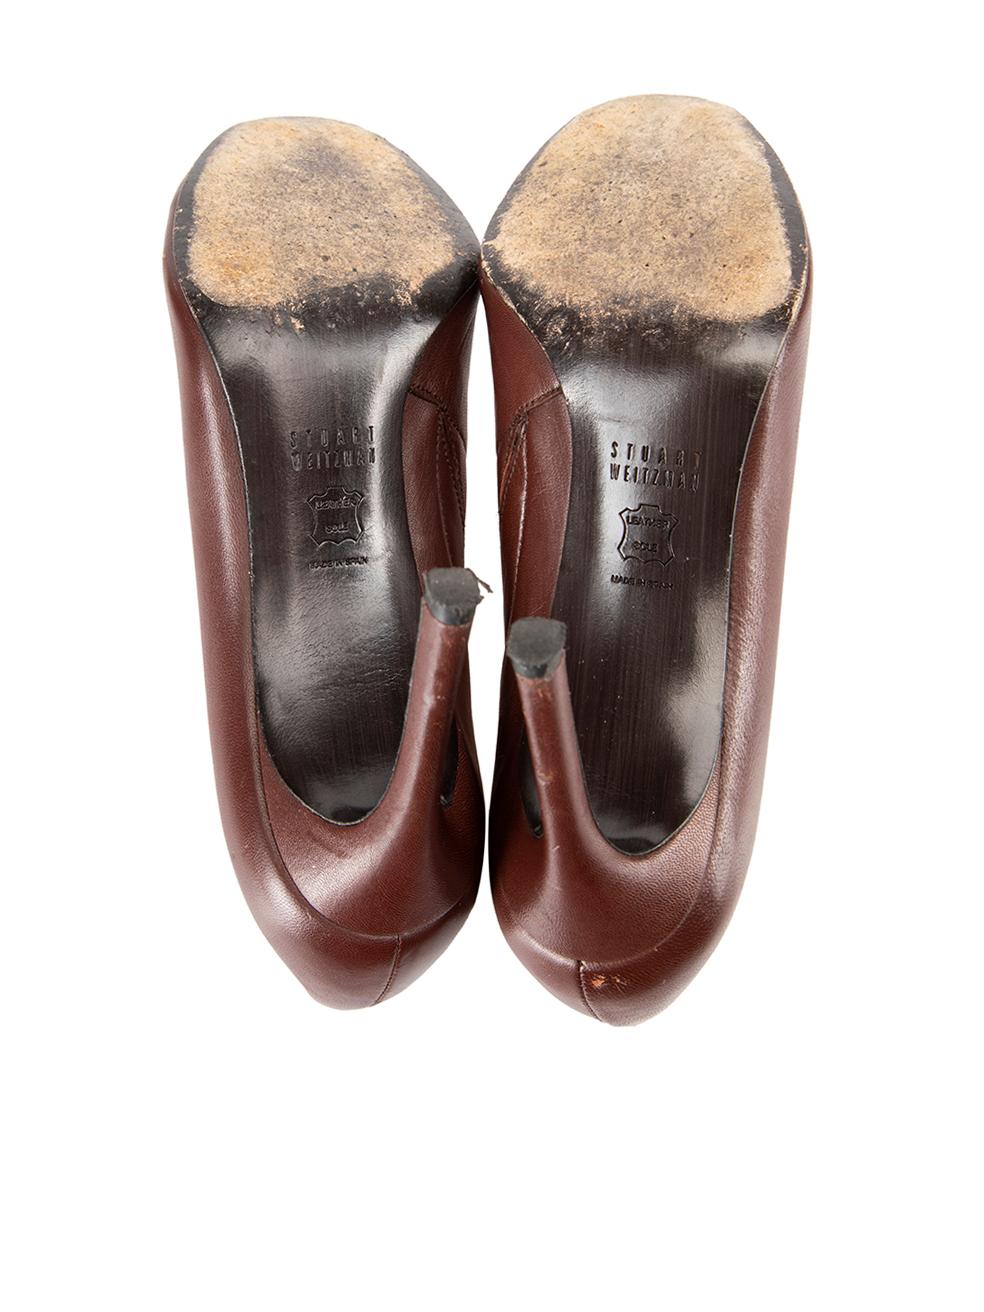 Women's Burgundy Leather Peep Toe Heels Size US 8.5 For Sale